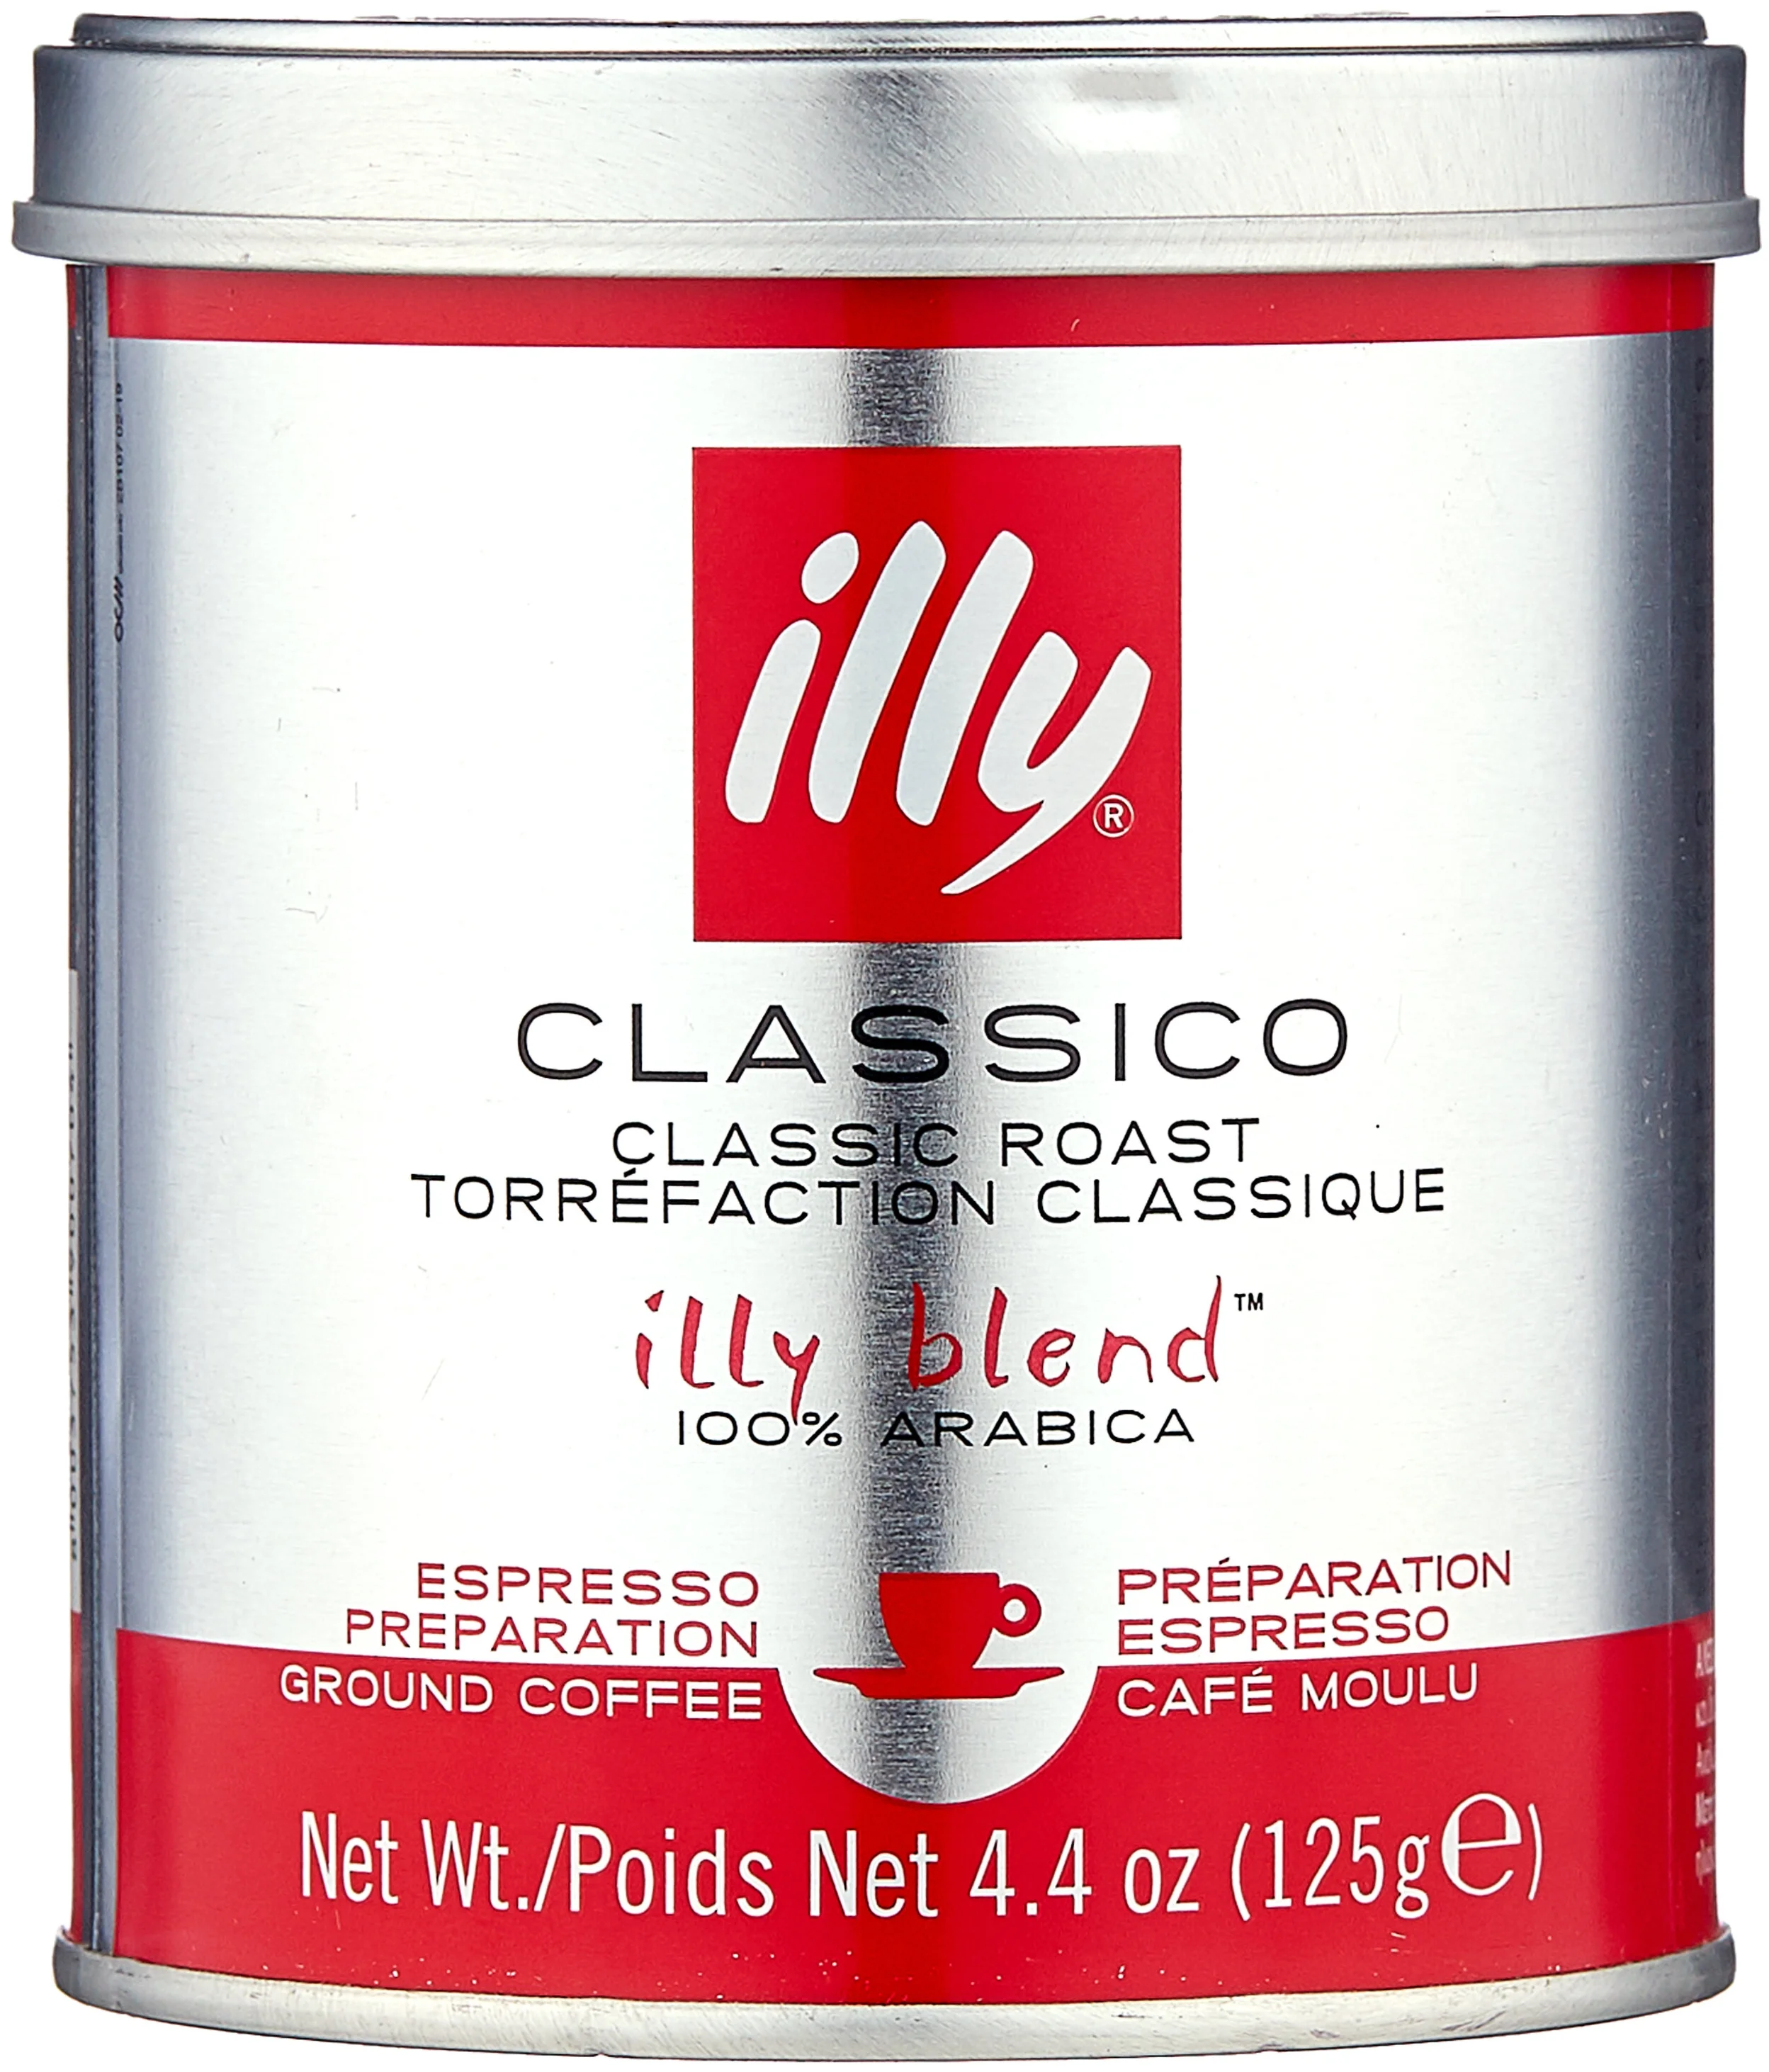 Illy "Classico Espresso" - вид напитка: американо, эспрессо